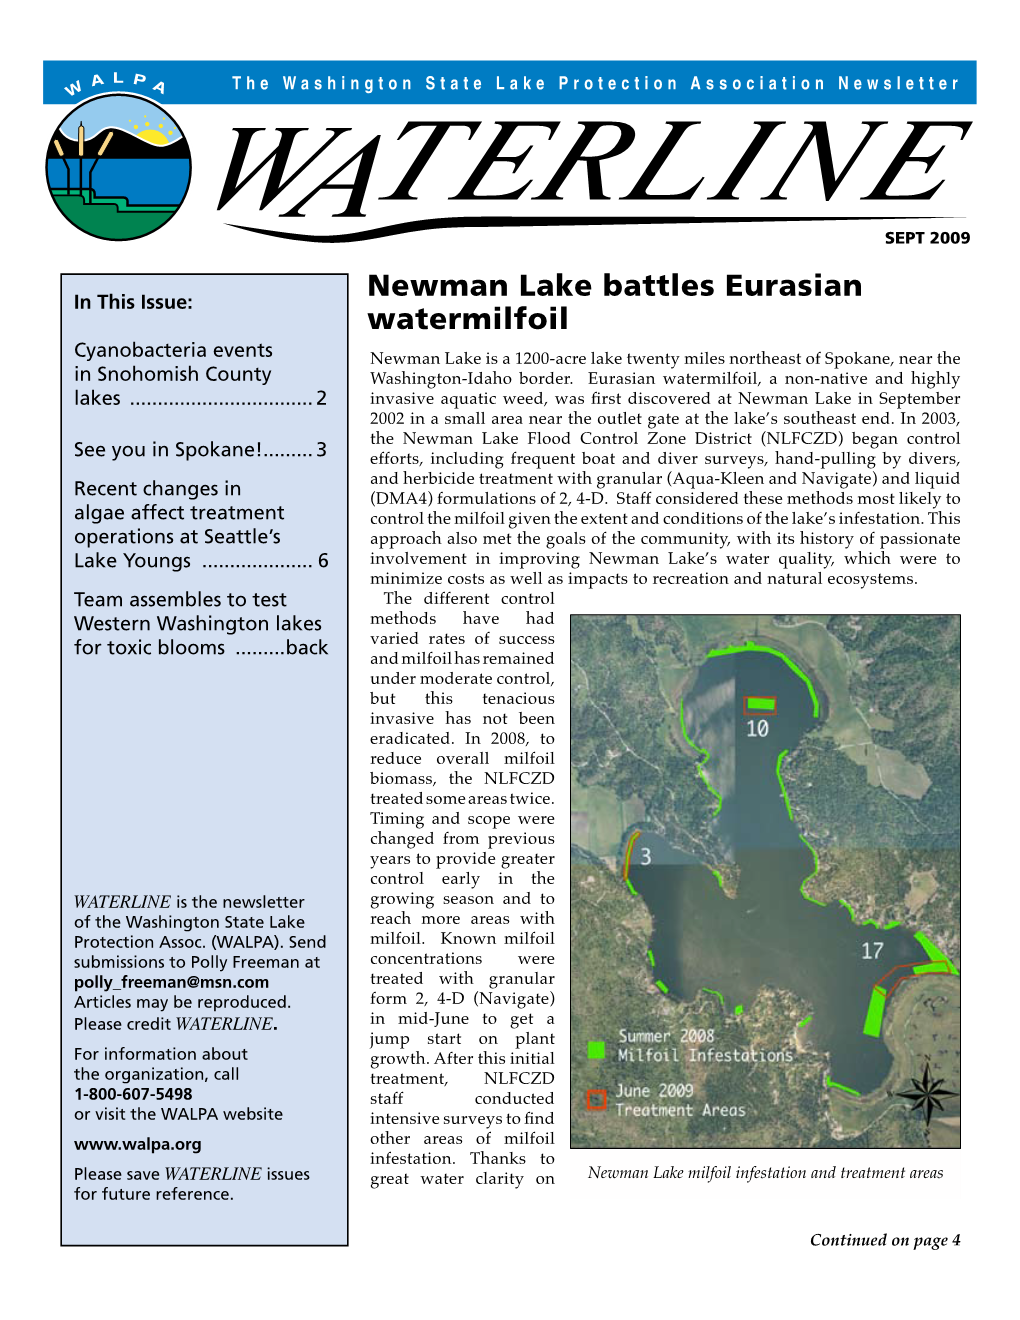 Newman Lake Battles Eurasian Watermilfoil